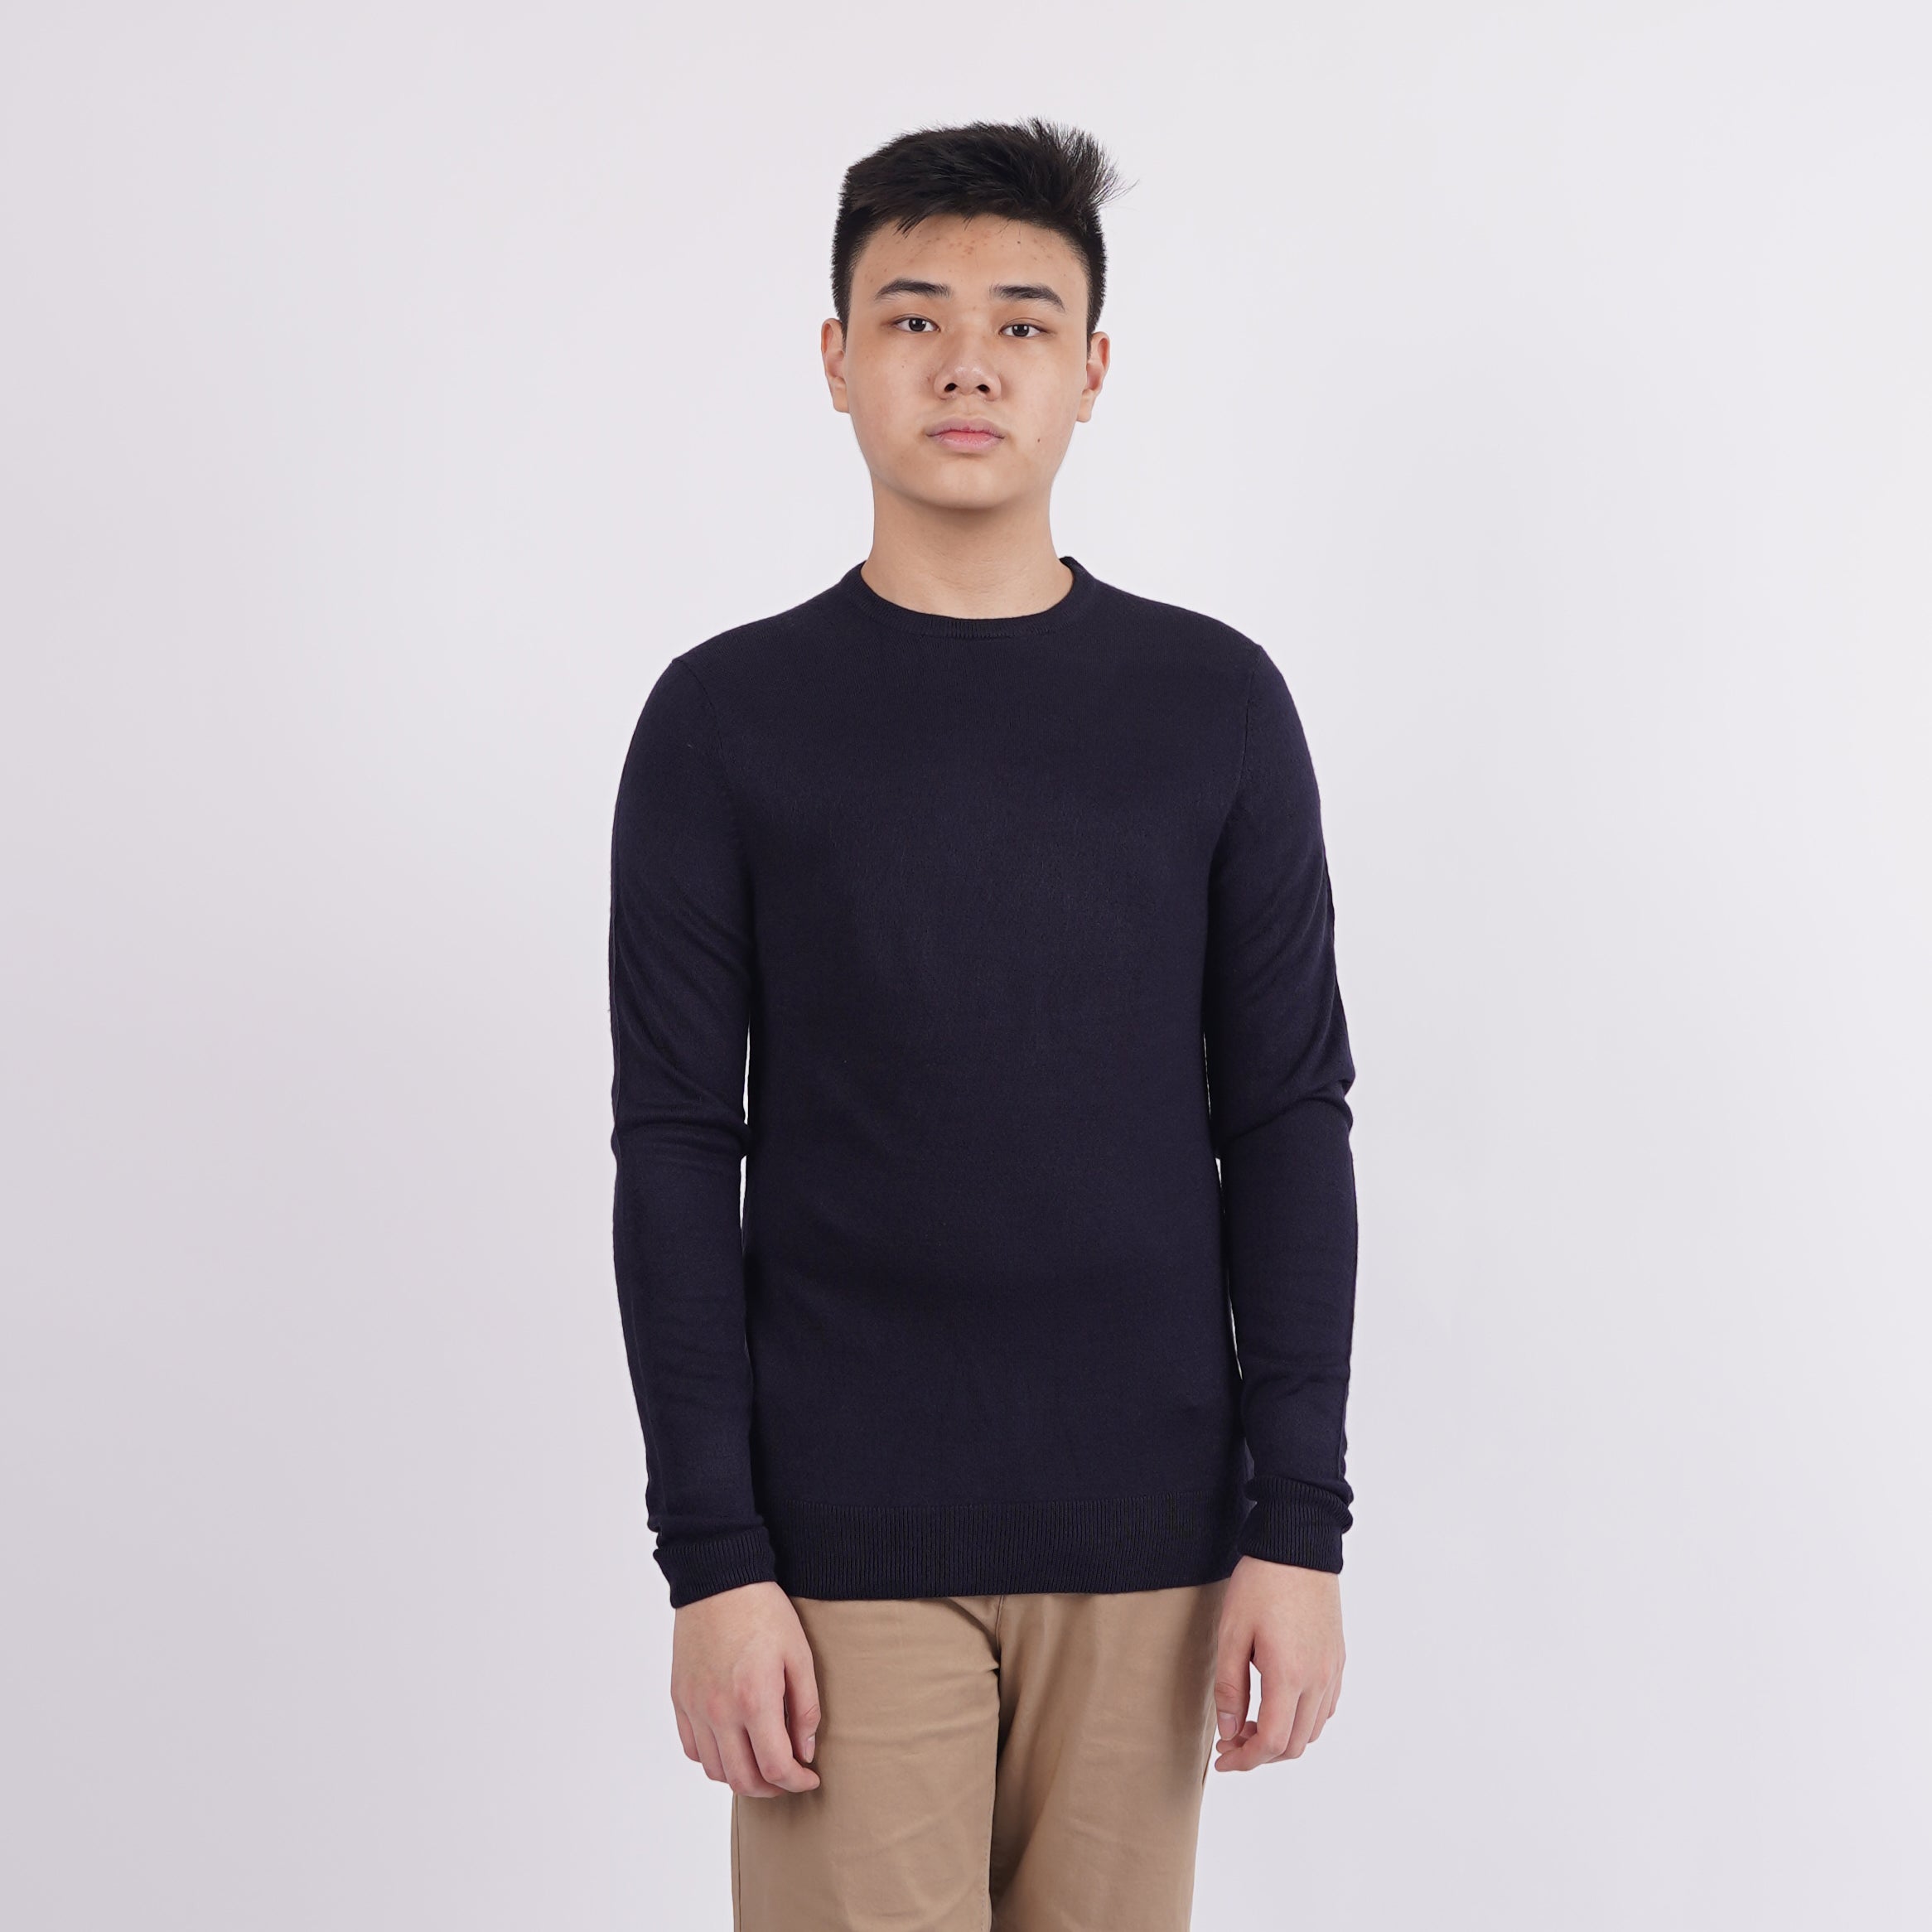 Sweatshirt Unisex- Round Neck Casual in 4 Colors [CG-FNF 01]